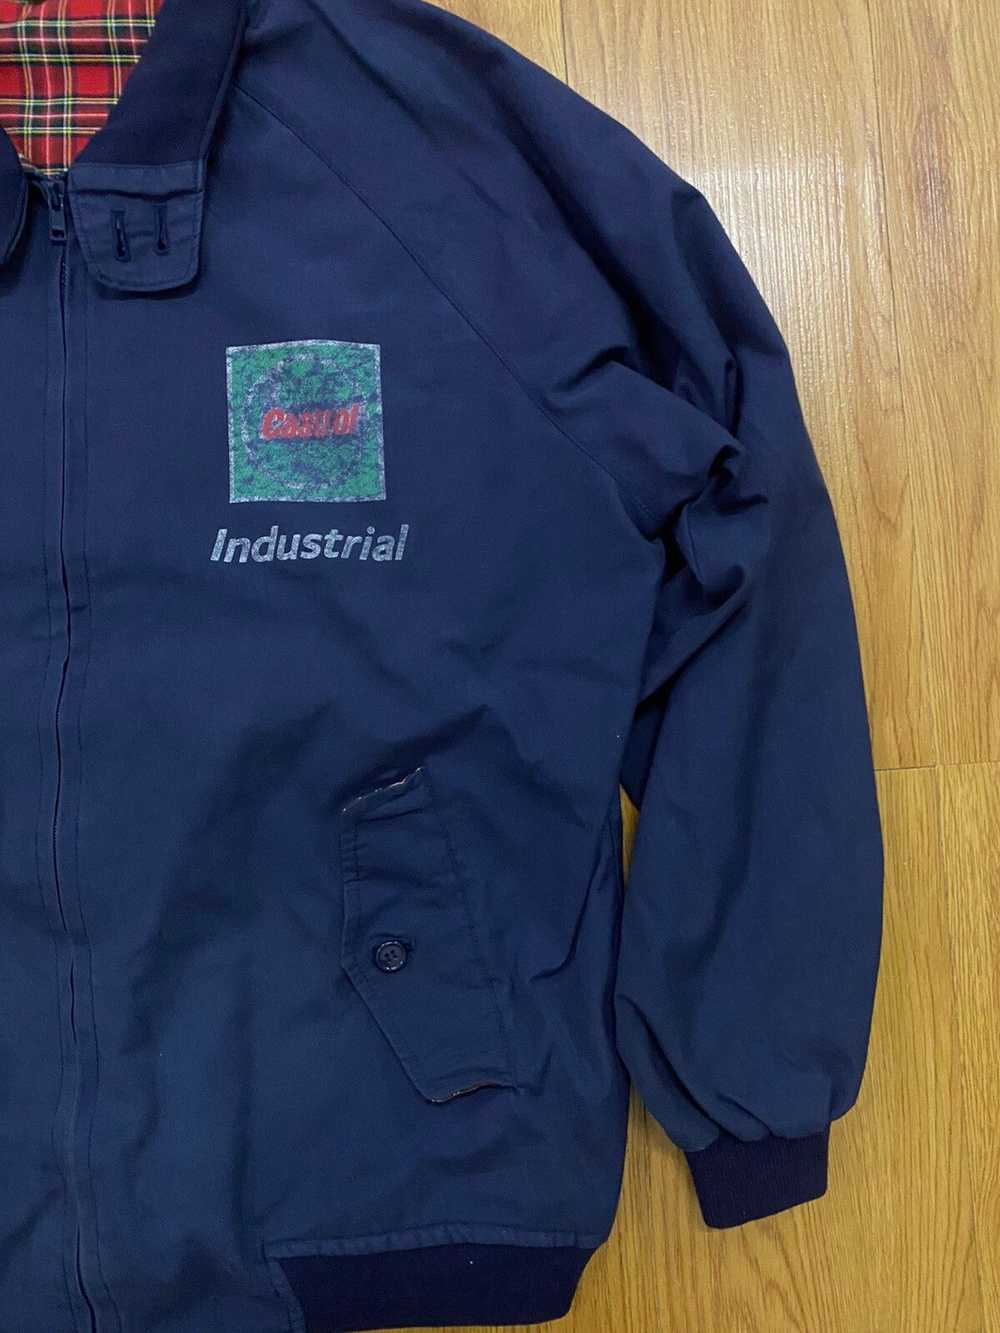 Japanese Brand × Racing Castrol Industrial Jacket - image 4